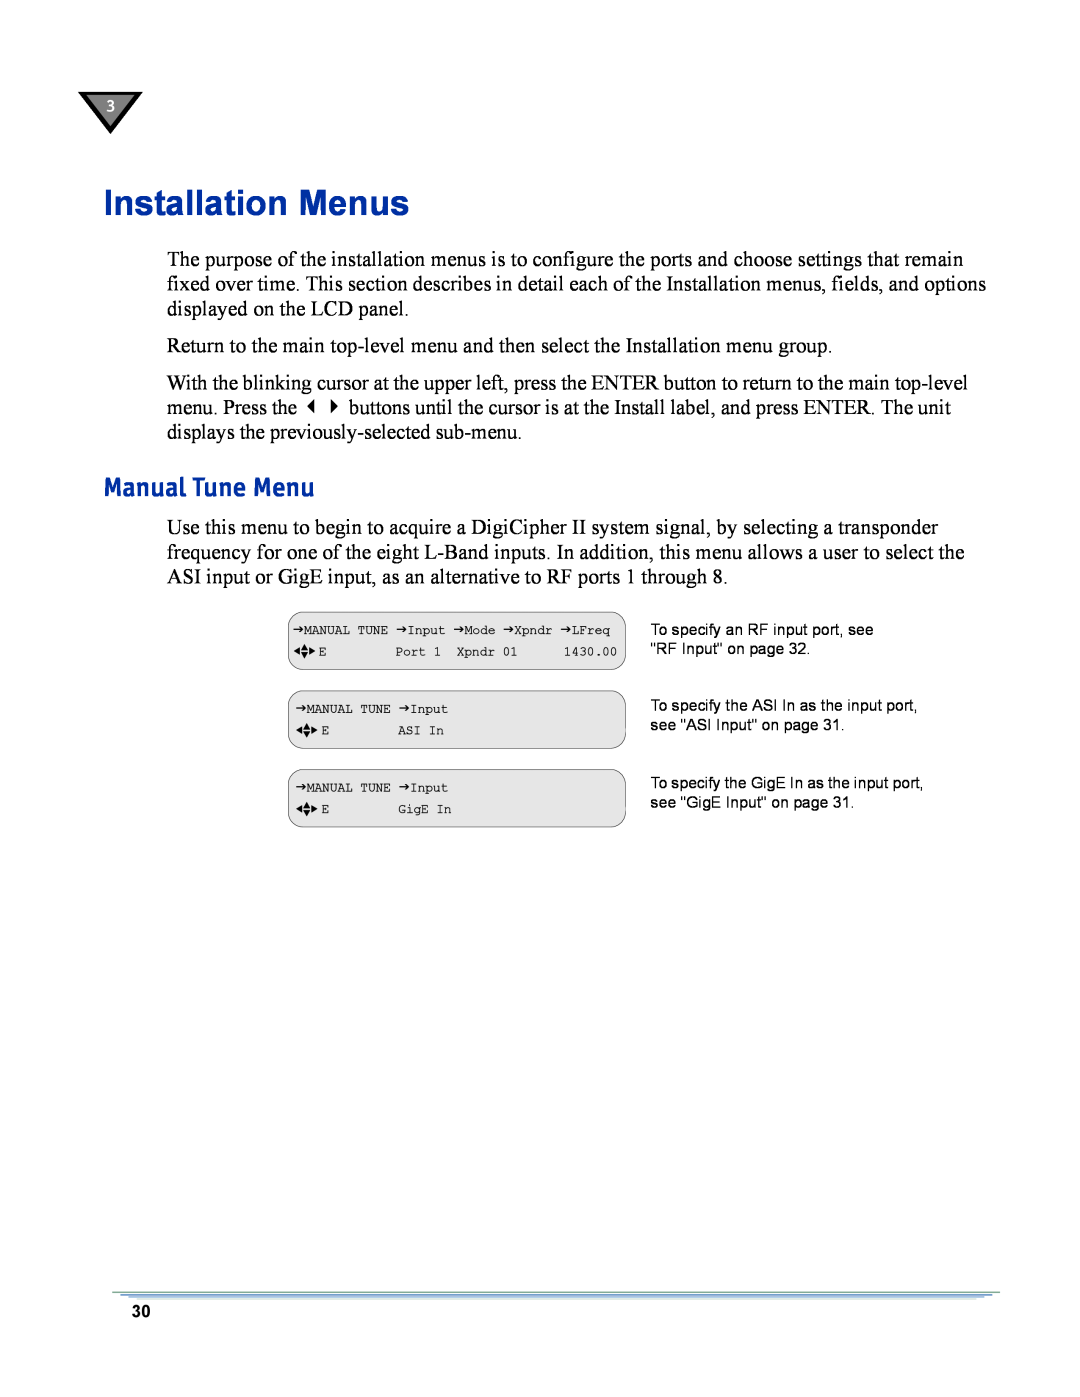 Motorola DSR-6400 manual Installation Menus, Manual Tune Menu 